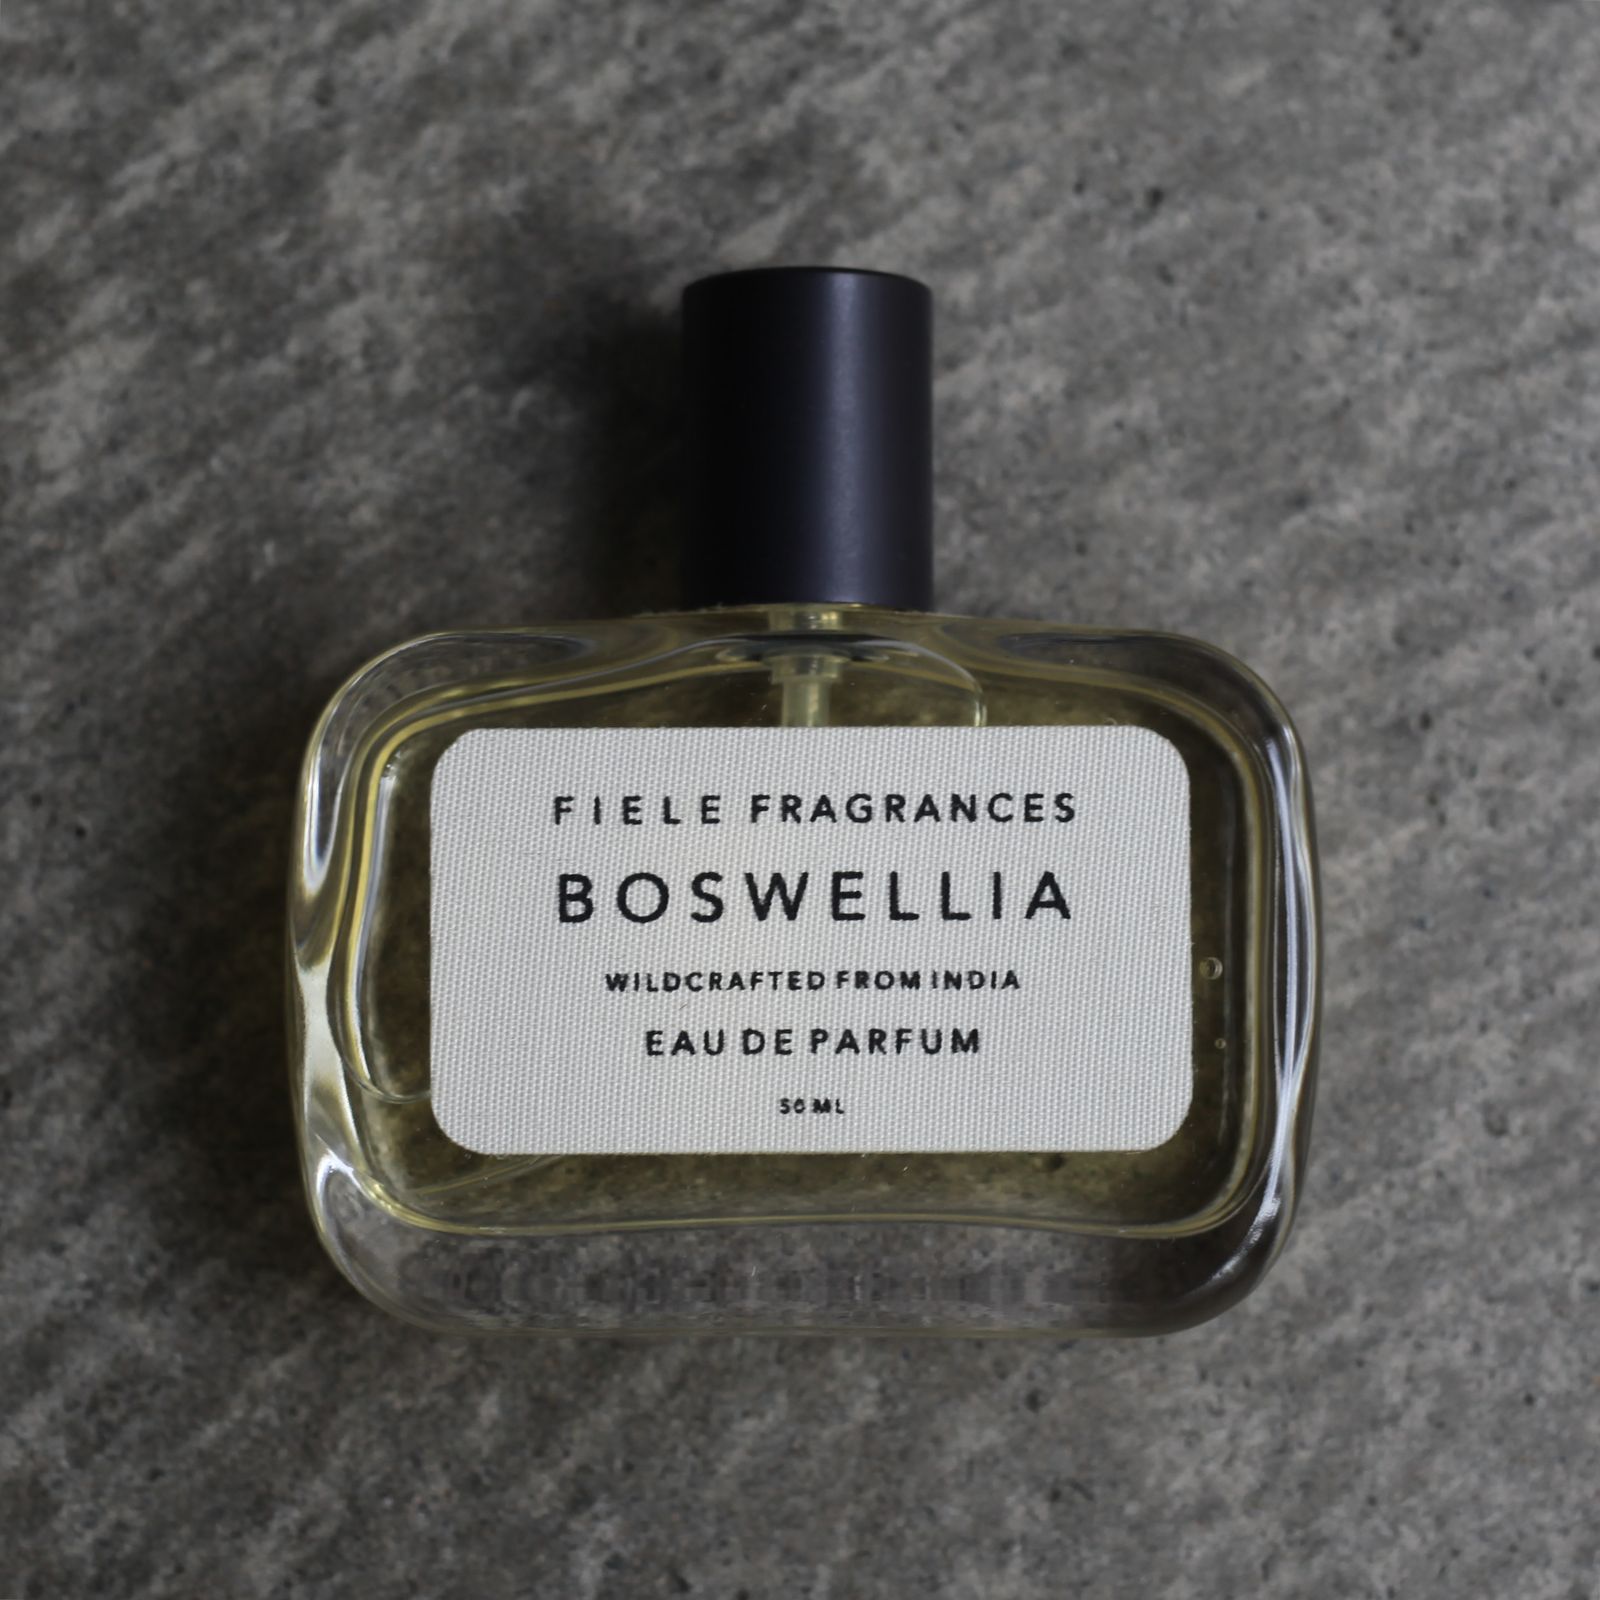 FIELE FRAGRANCES - 【残りわずか】Eau De Parfum 50ml(VIOLA 